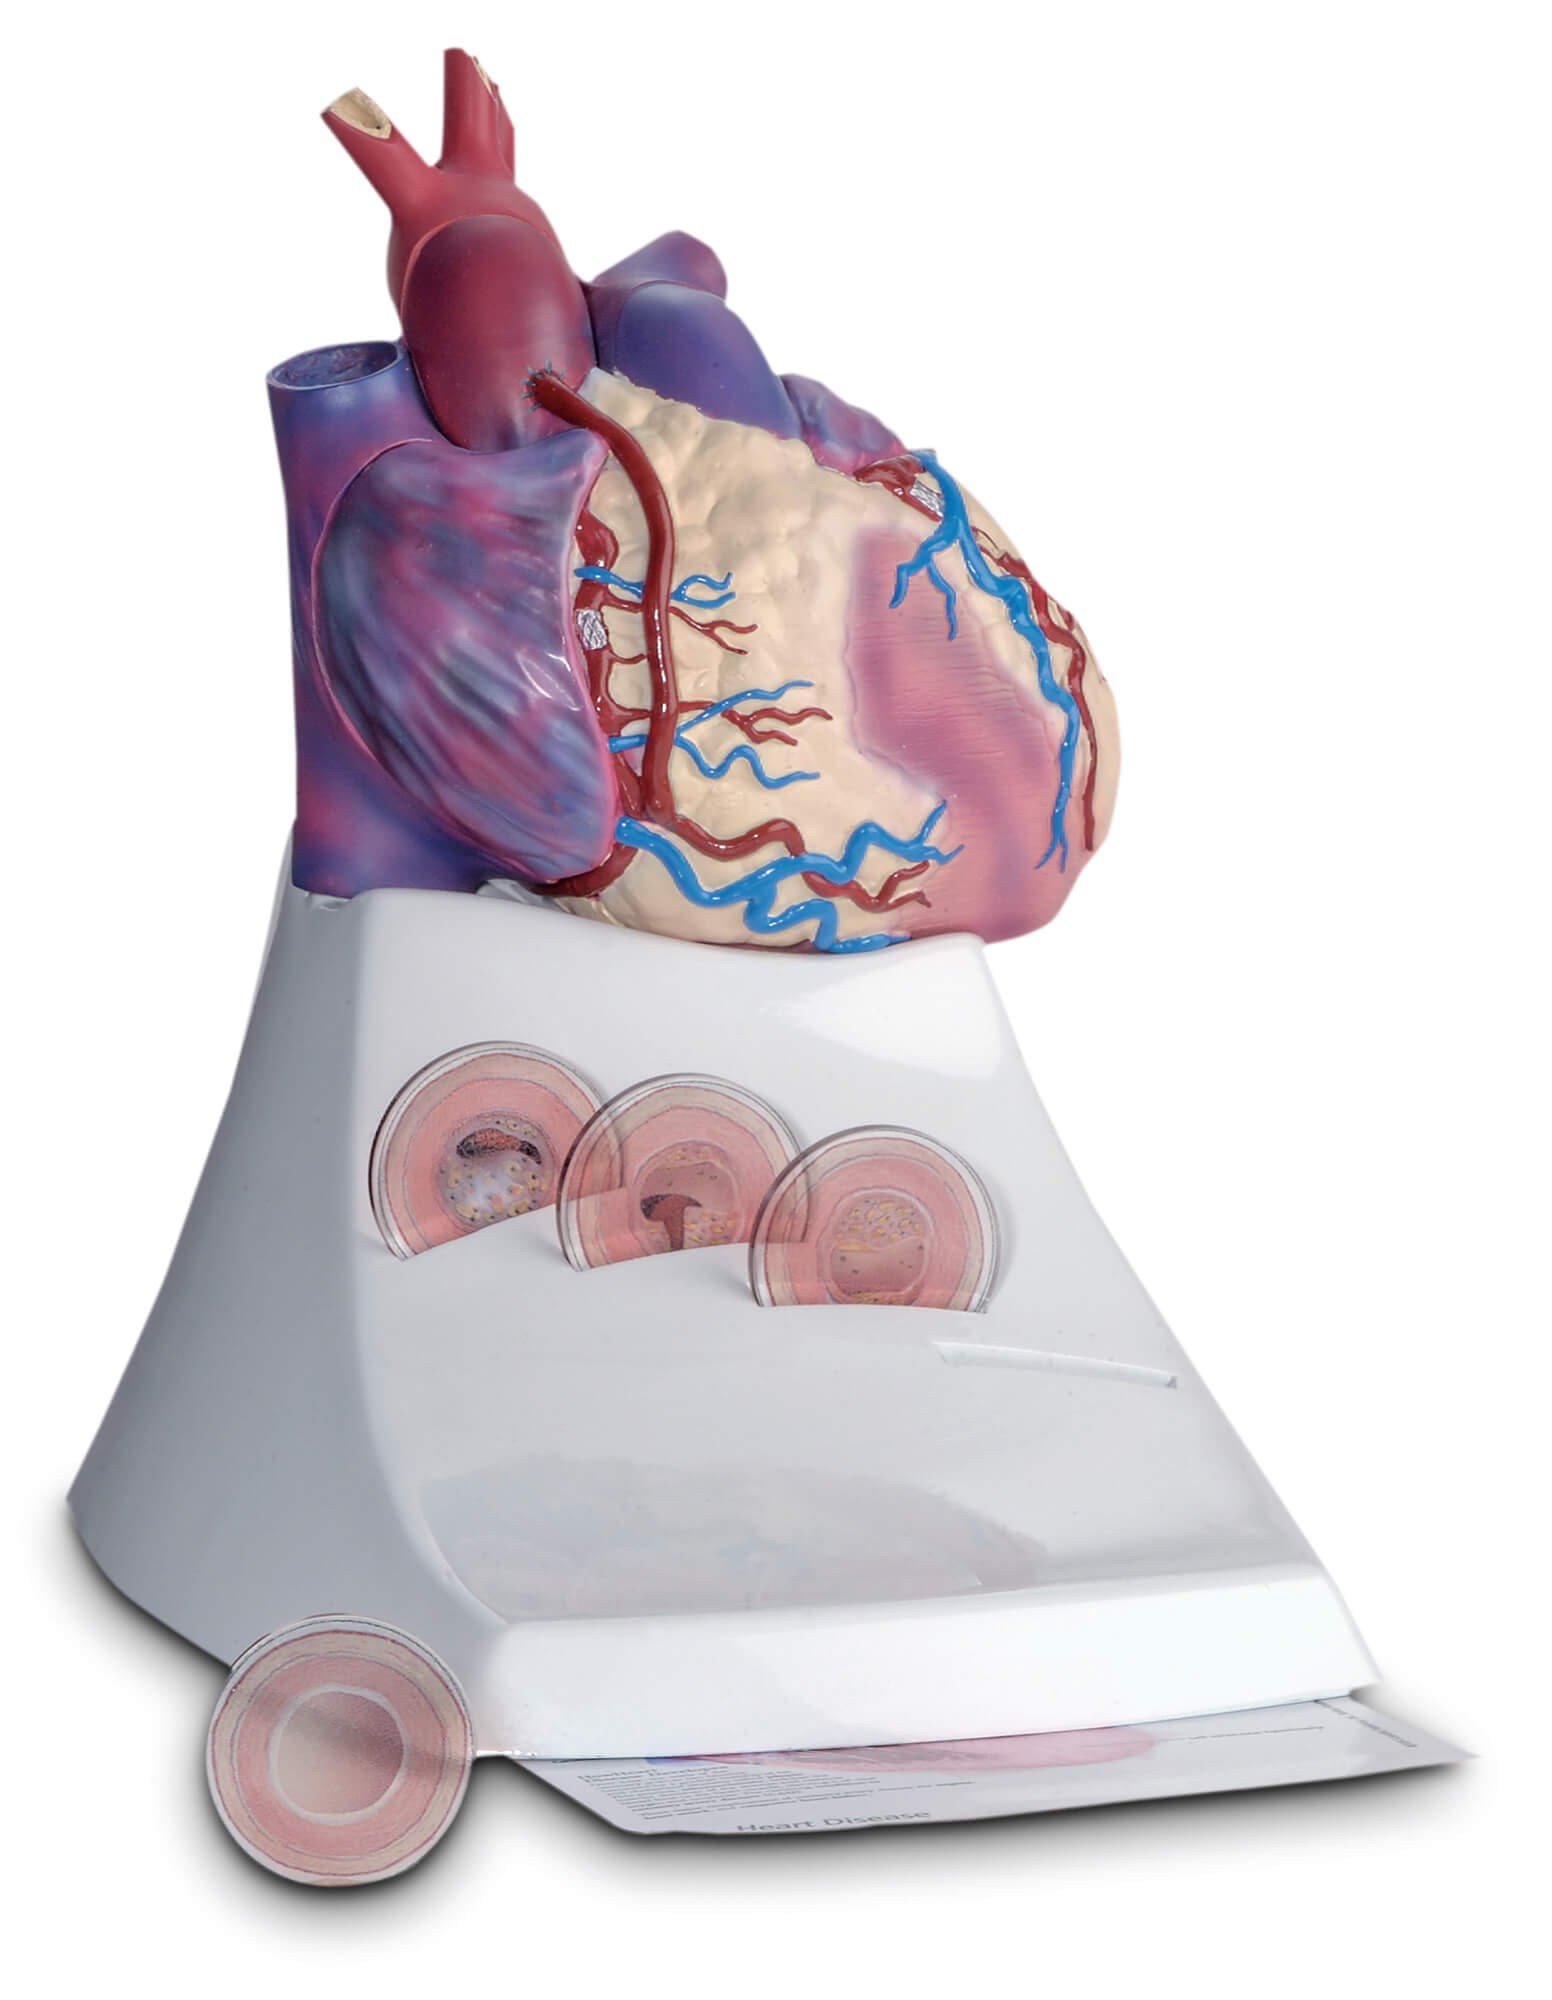 diseased heart model